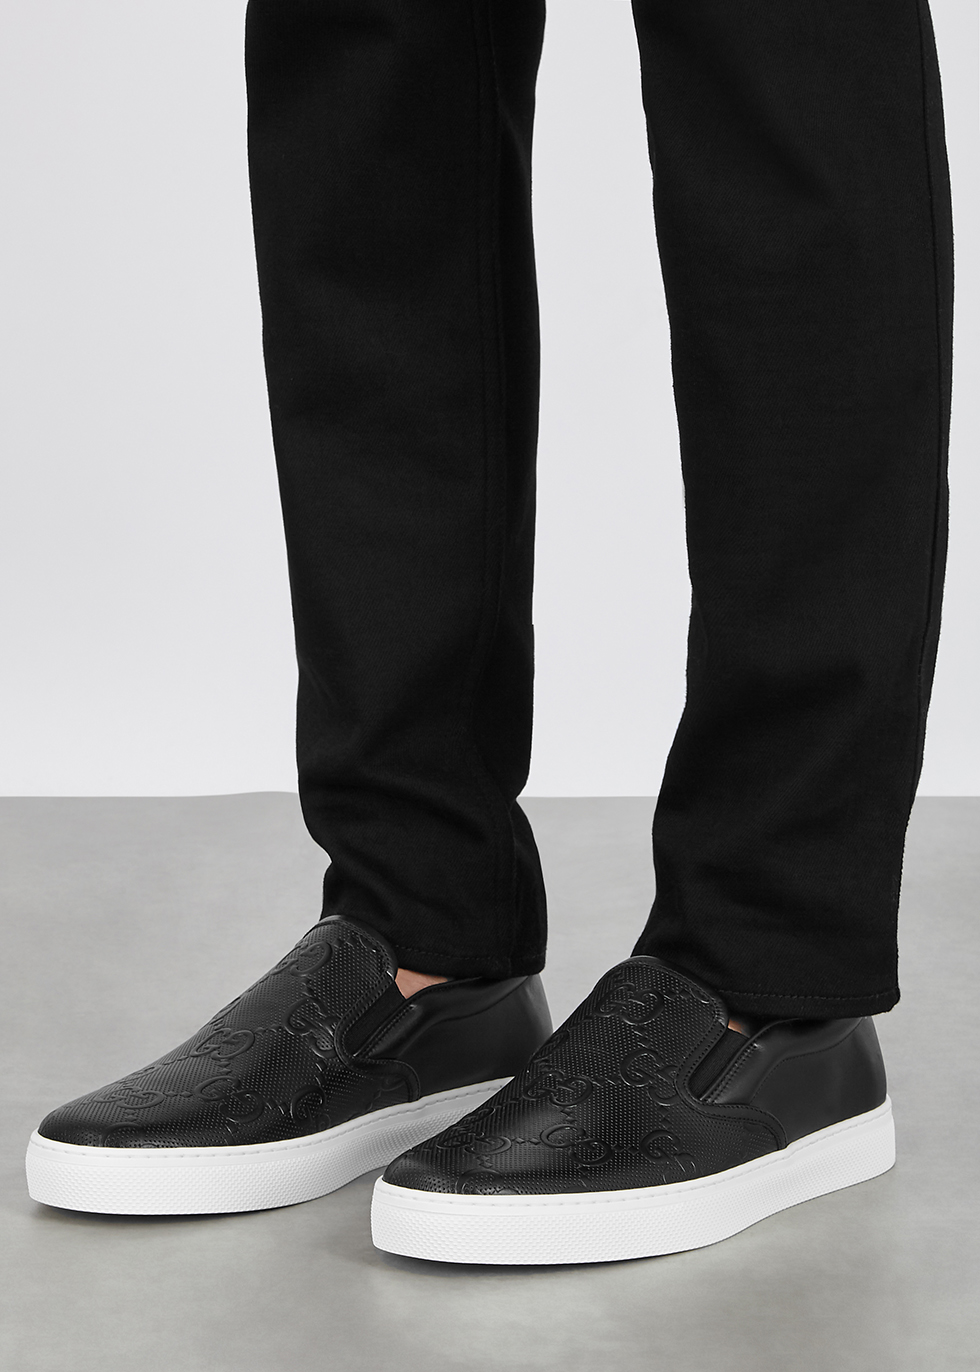 Gucci Dublin black leather sneakers 